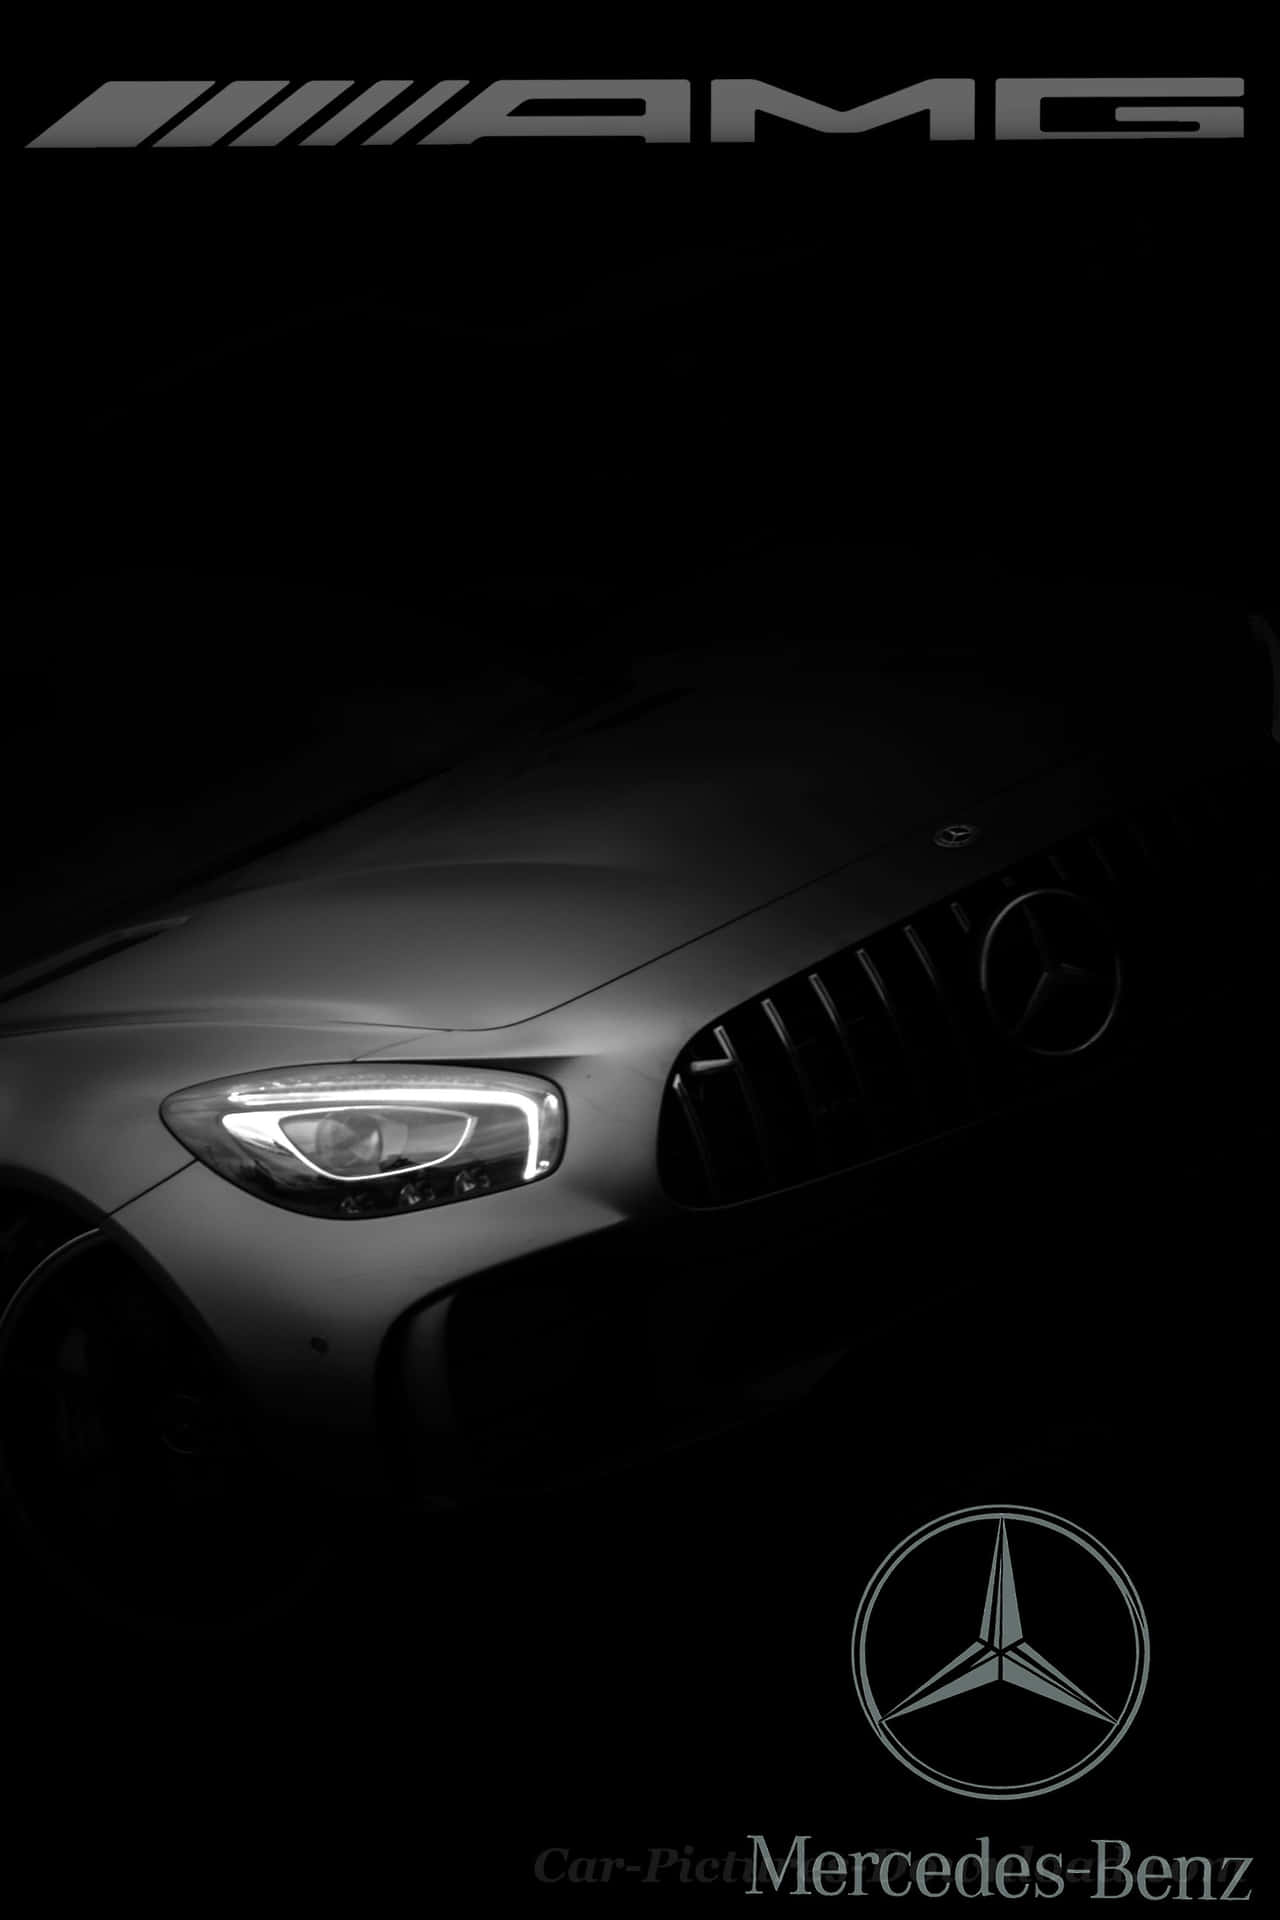 Expensive Mercedes Benz Vignette Background